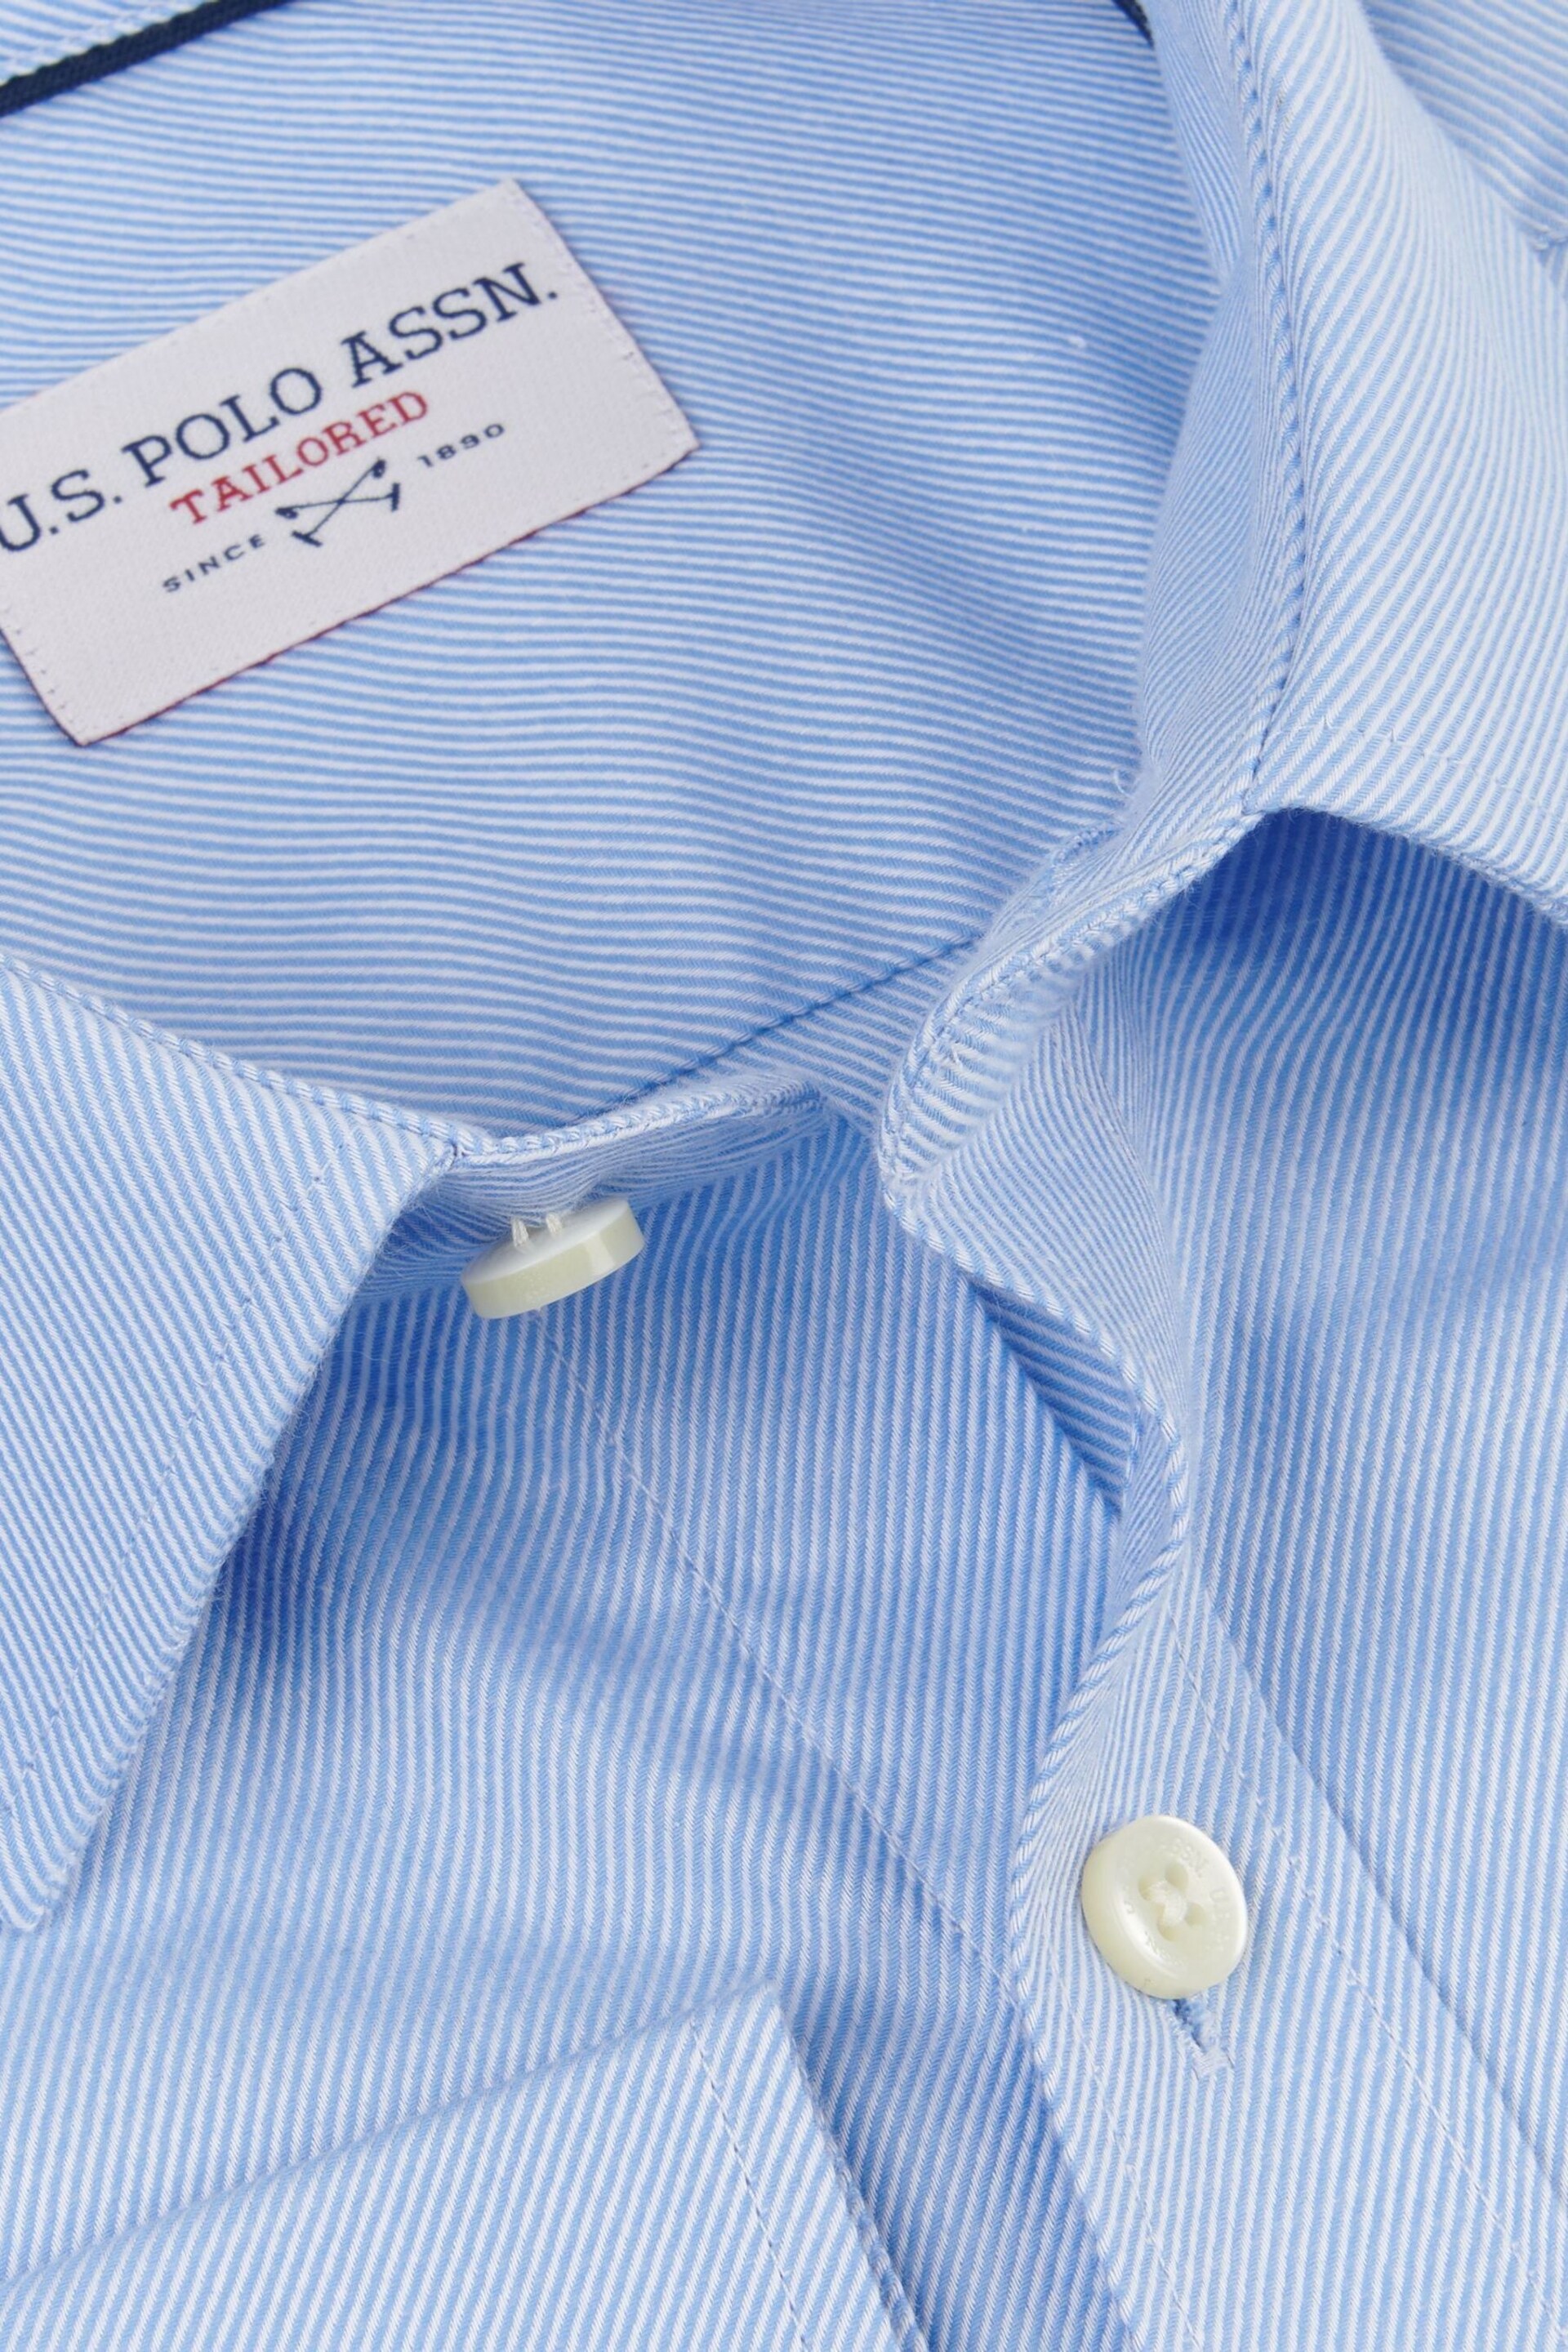 U.S. Polo Assn. Mens Long Sleeve Royal Twill Shirt - Image 8 of 8